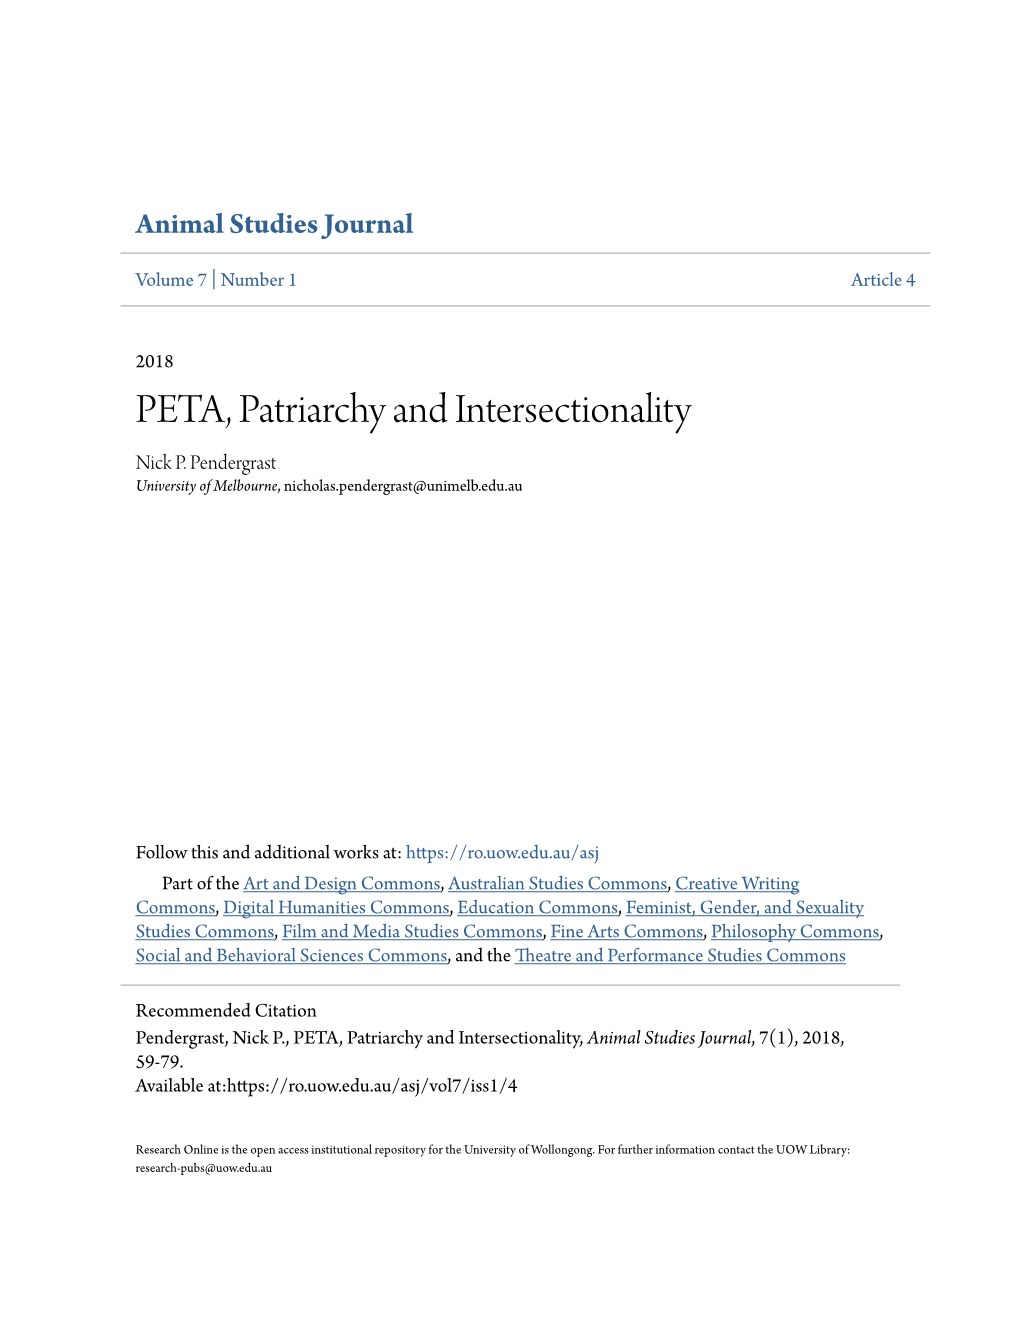 PETA, Patriarchy and Intersectionality Nick P